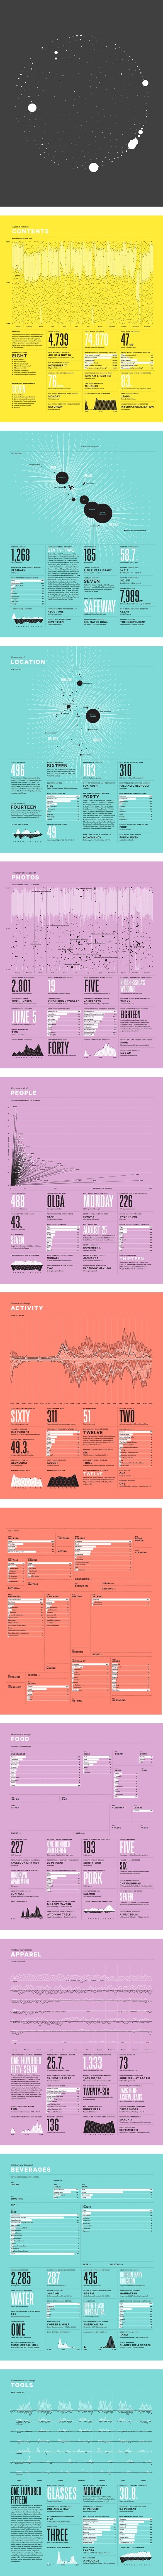 Nicholas Felton #infographic #data